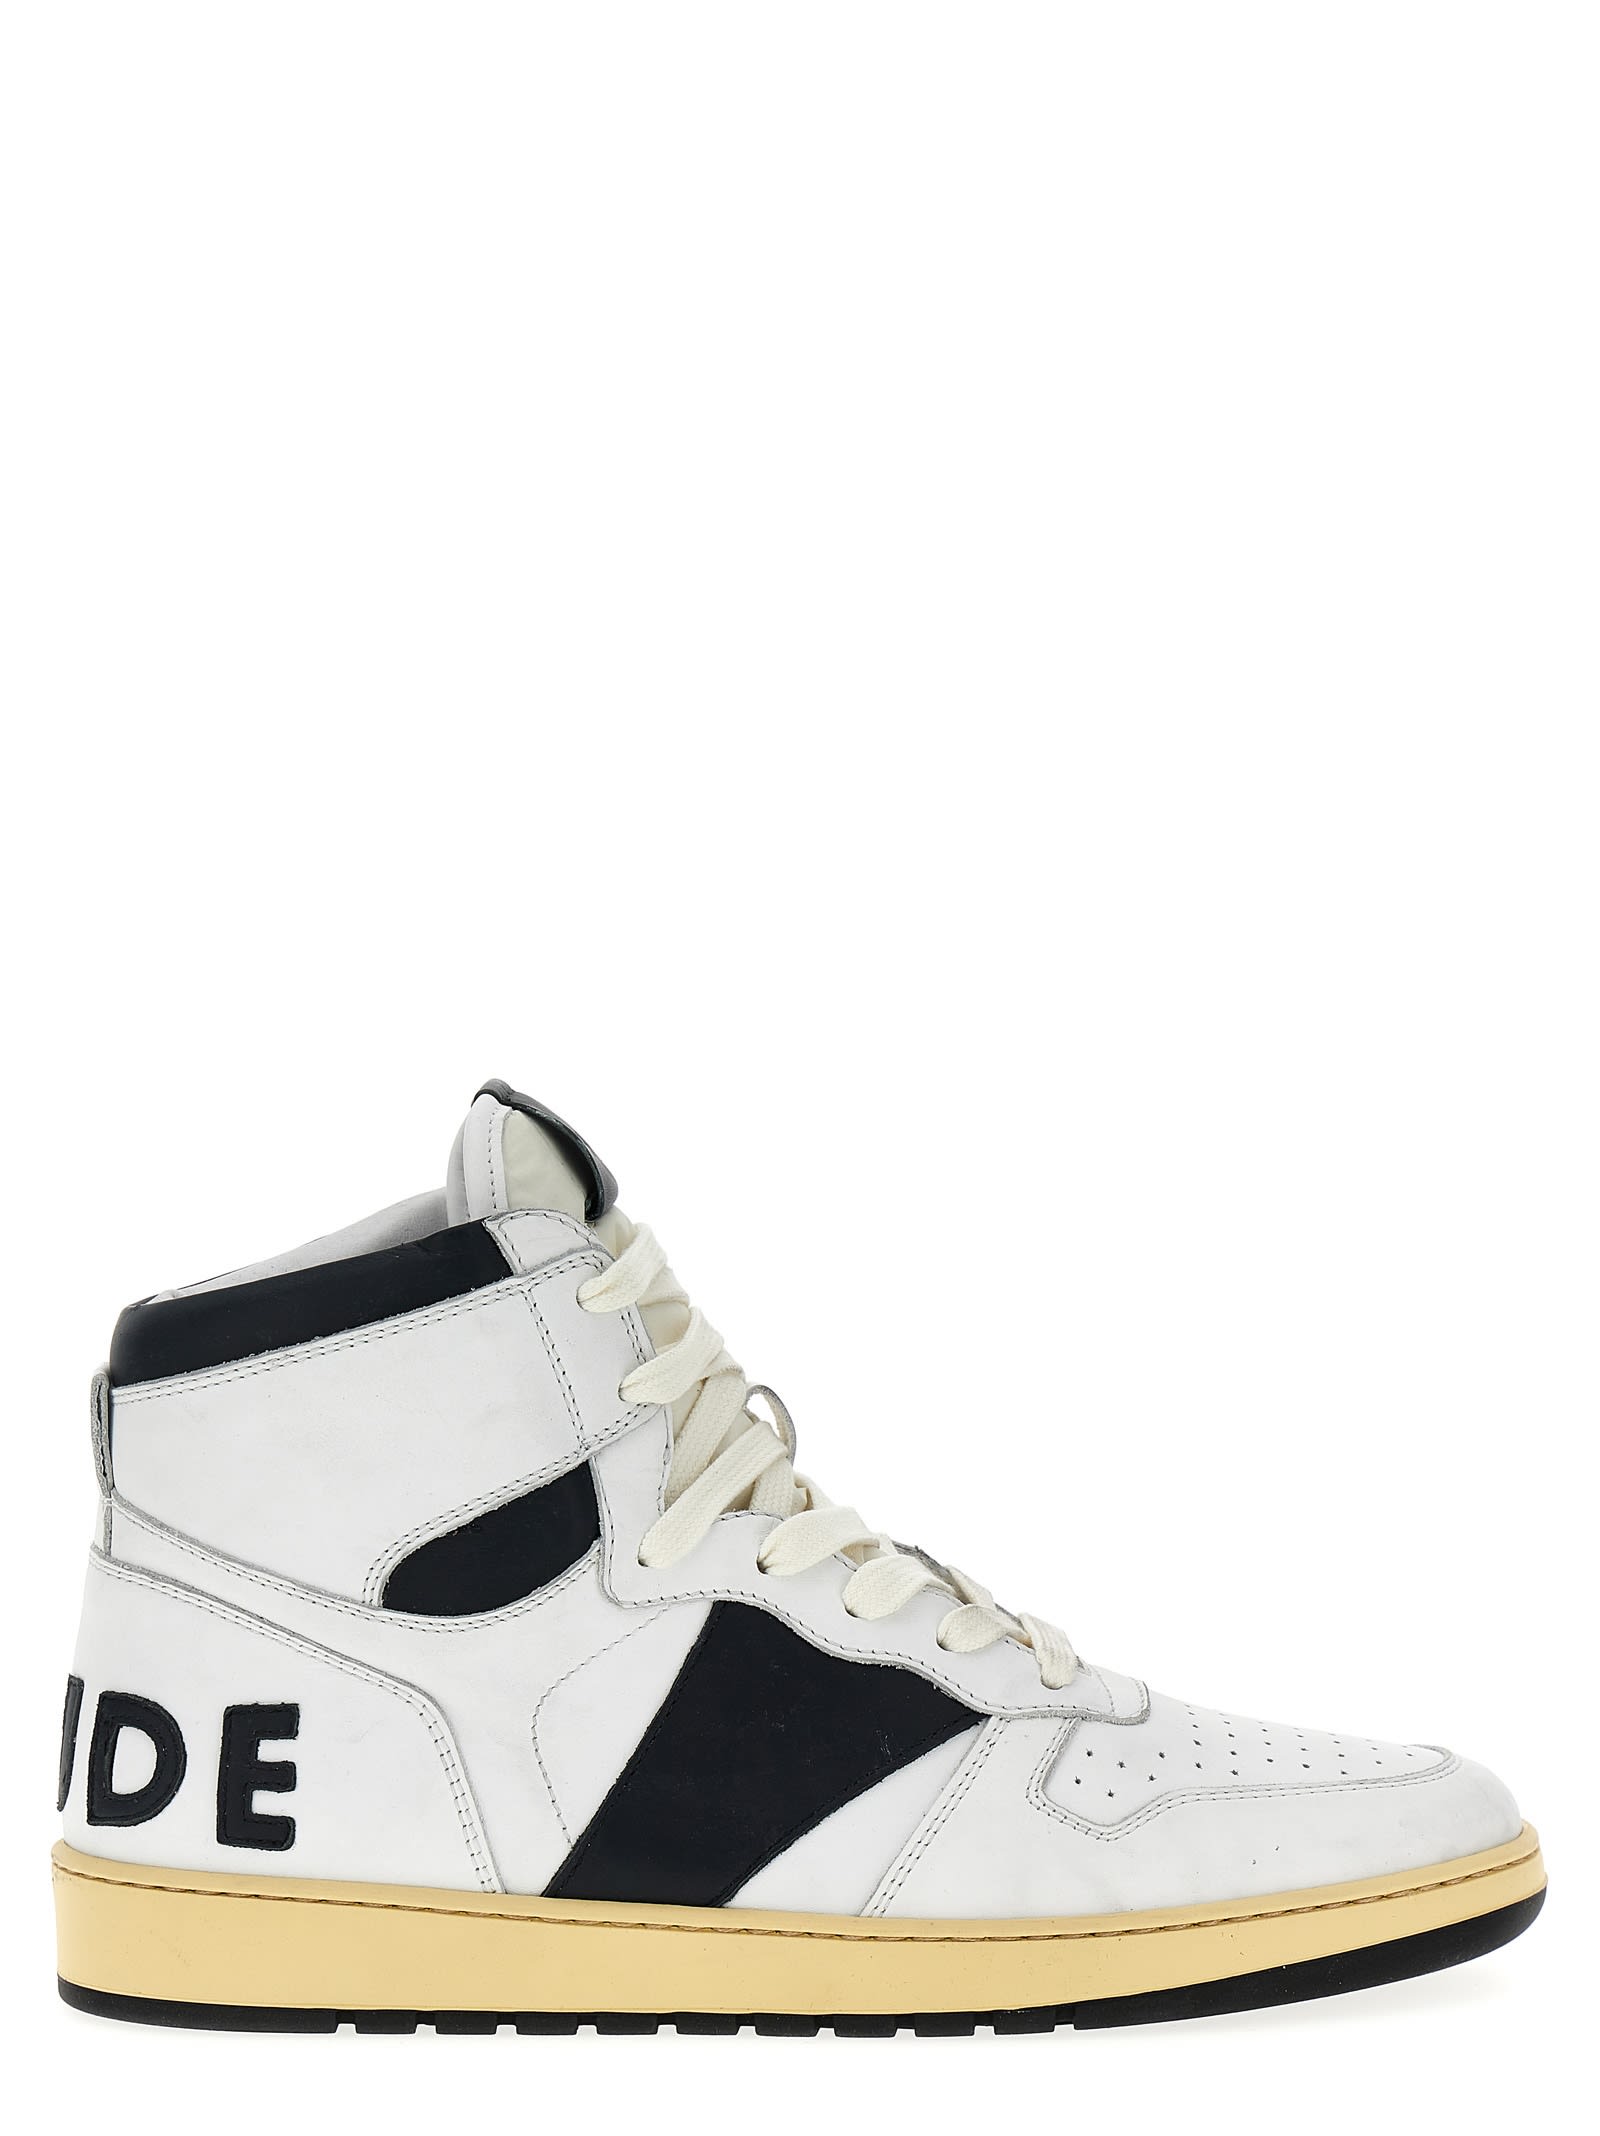 Shop Rhude Rhecess Sneakers In White/black